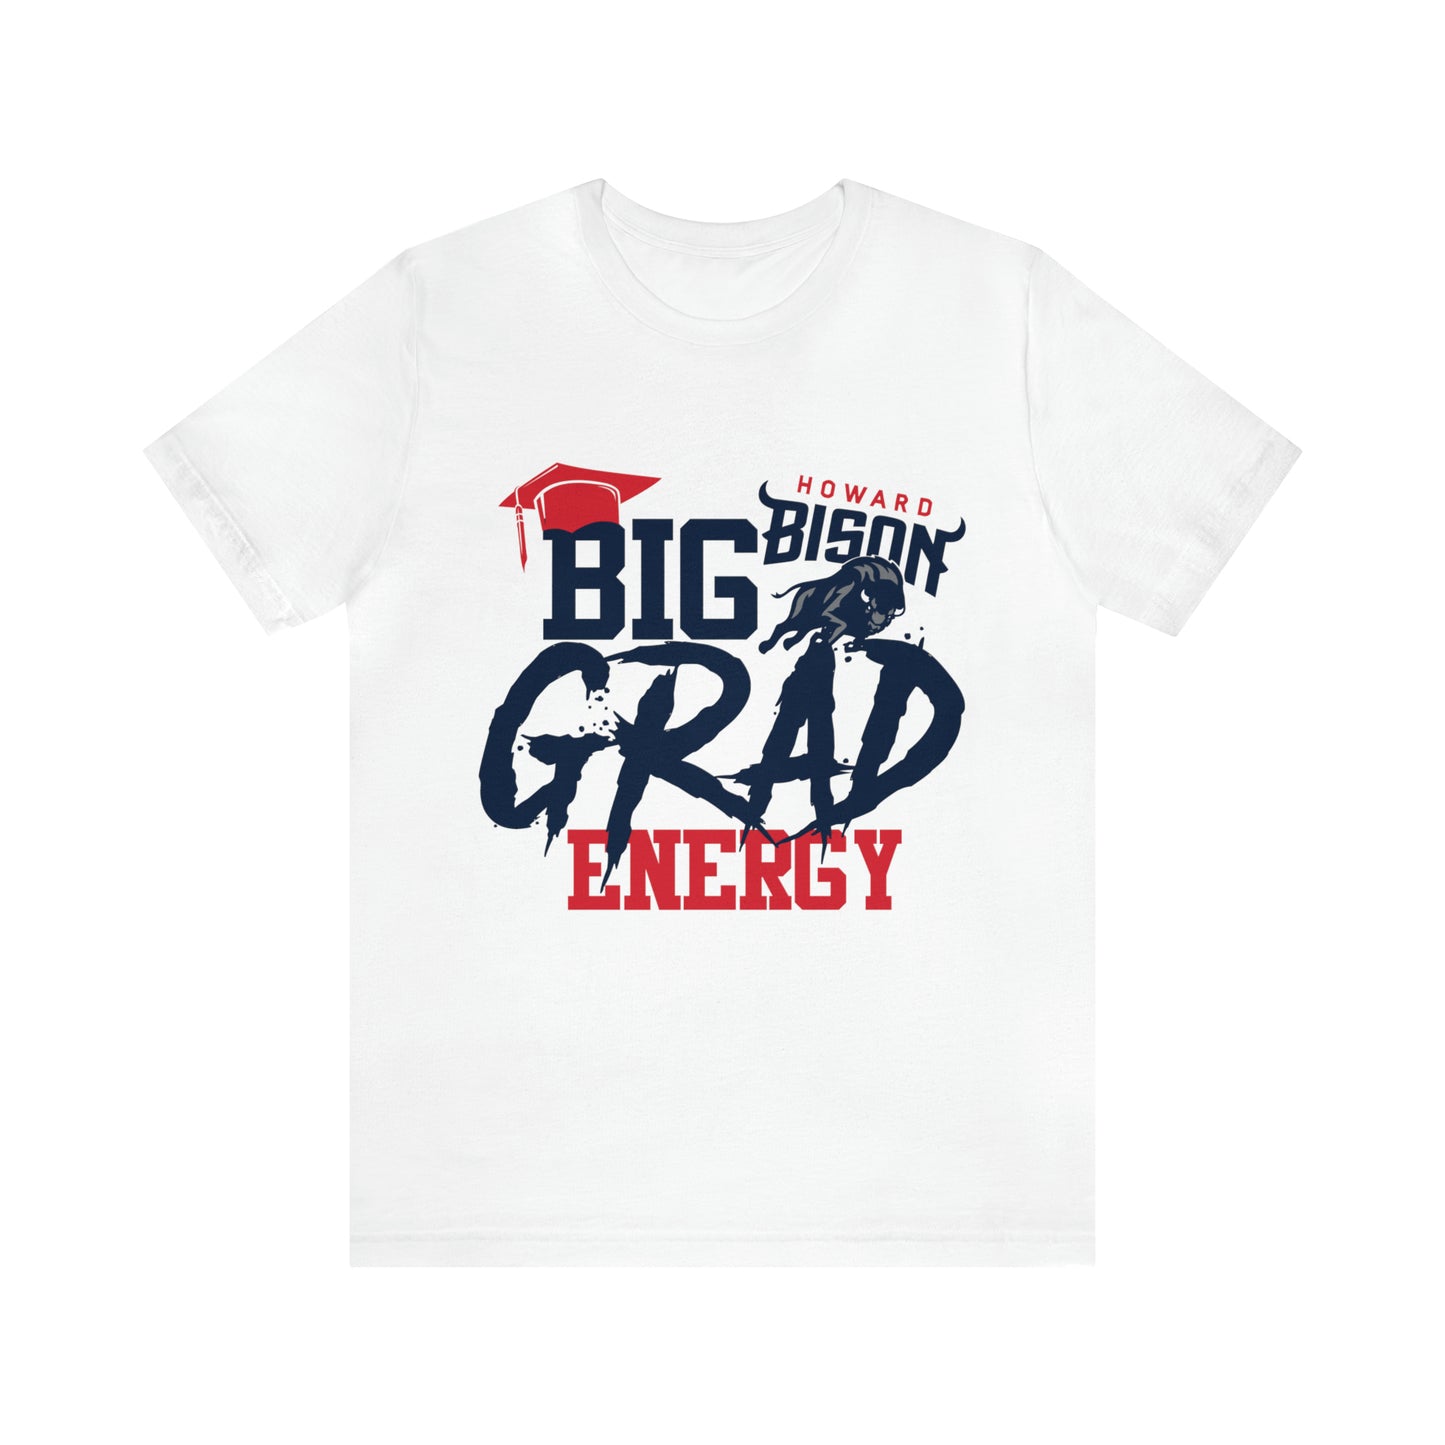 HBCU Love (Howard University Big Grad Energy/ Unisex Jersey Short Sleeve Tee)